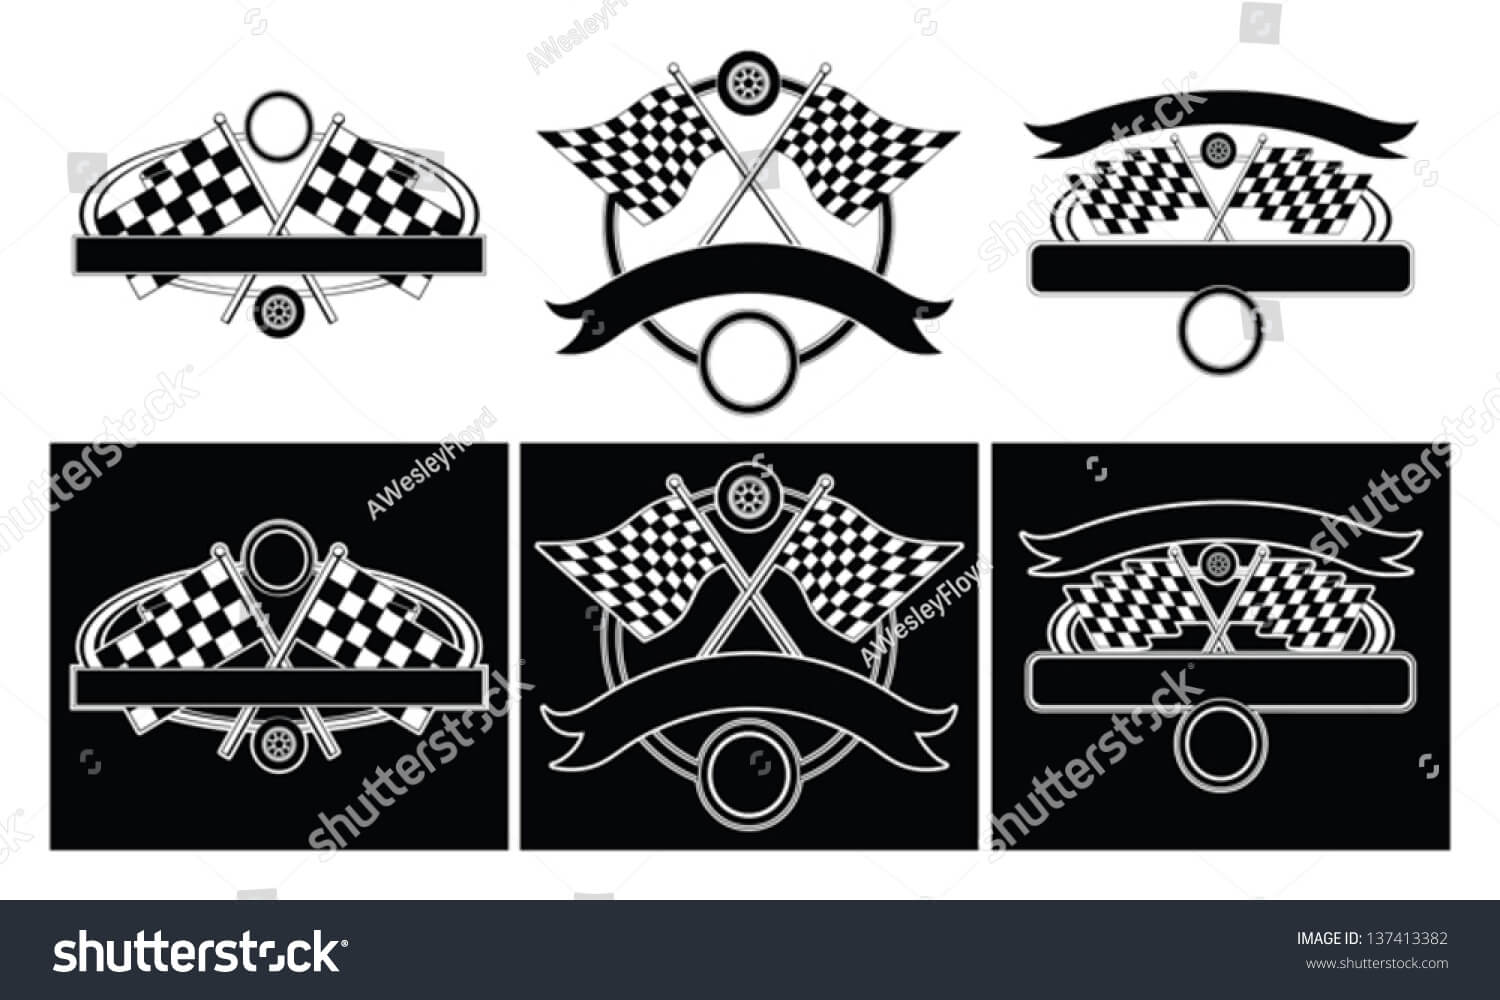 Racing Design Templates Illustration Designs Car Stock With Blank Race Car Templates